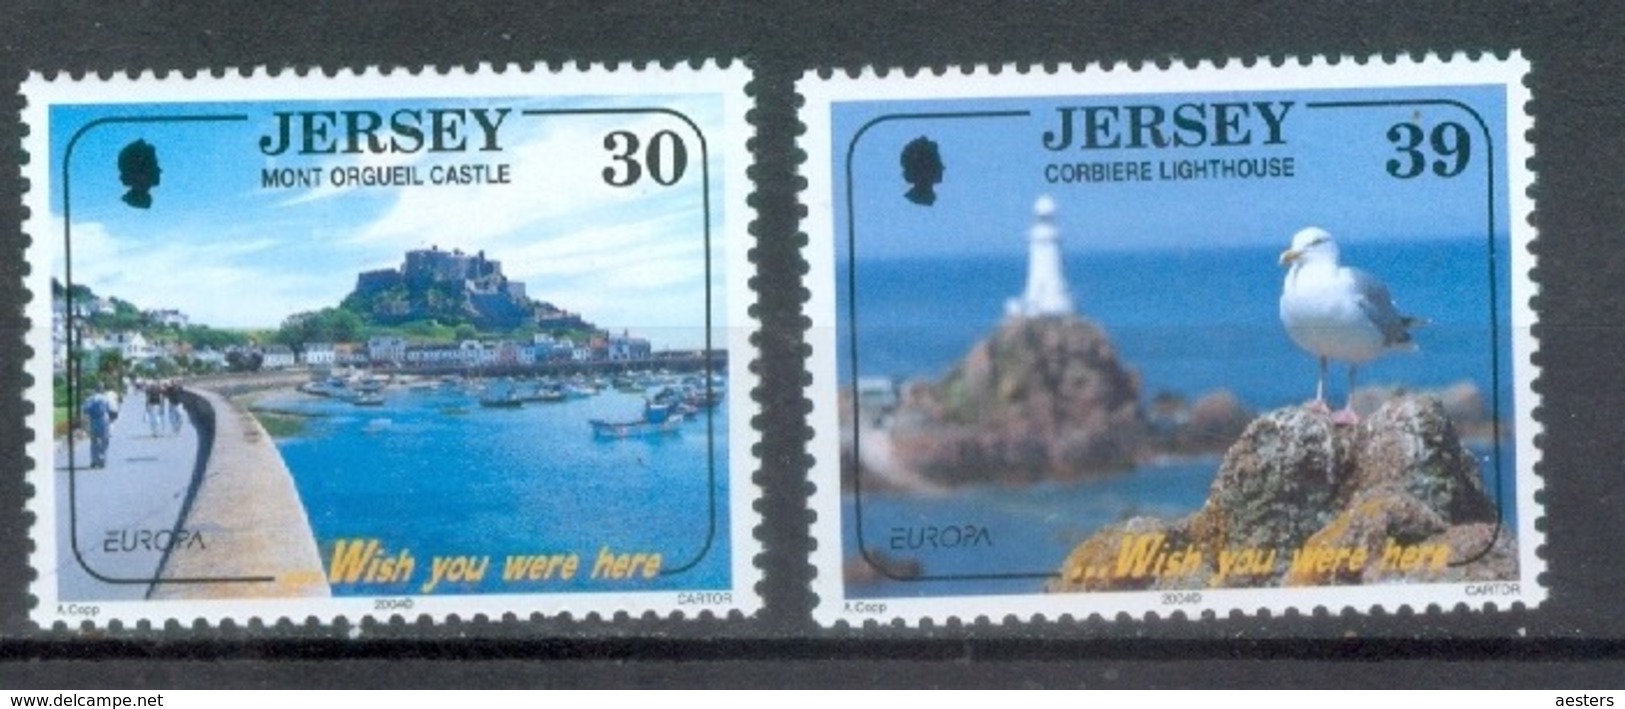 Jersey 2004; Europa Cept, Michel 1119-1120.** (MNH) - 2004